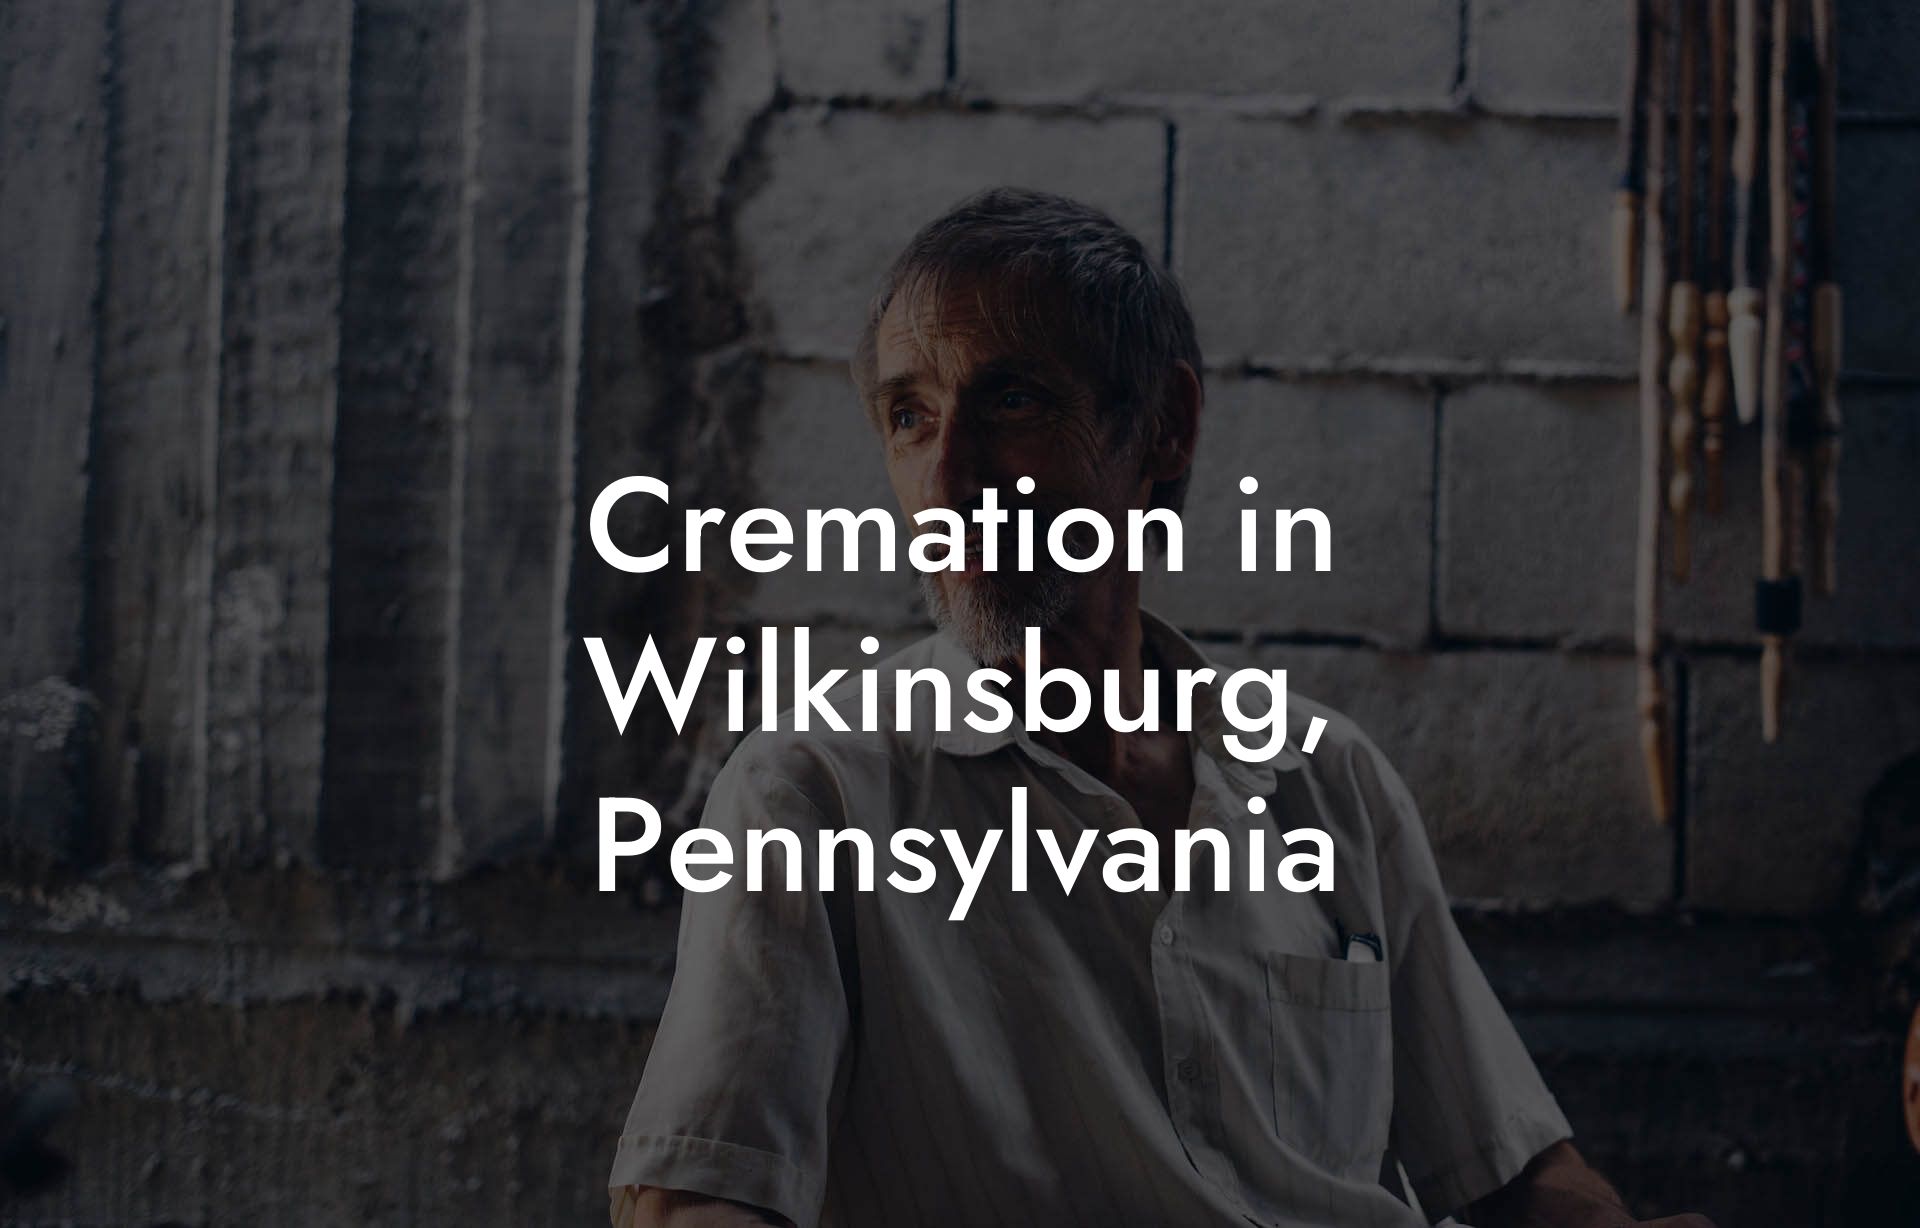 Cremation in Wilkinsburg, Pennsylvania